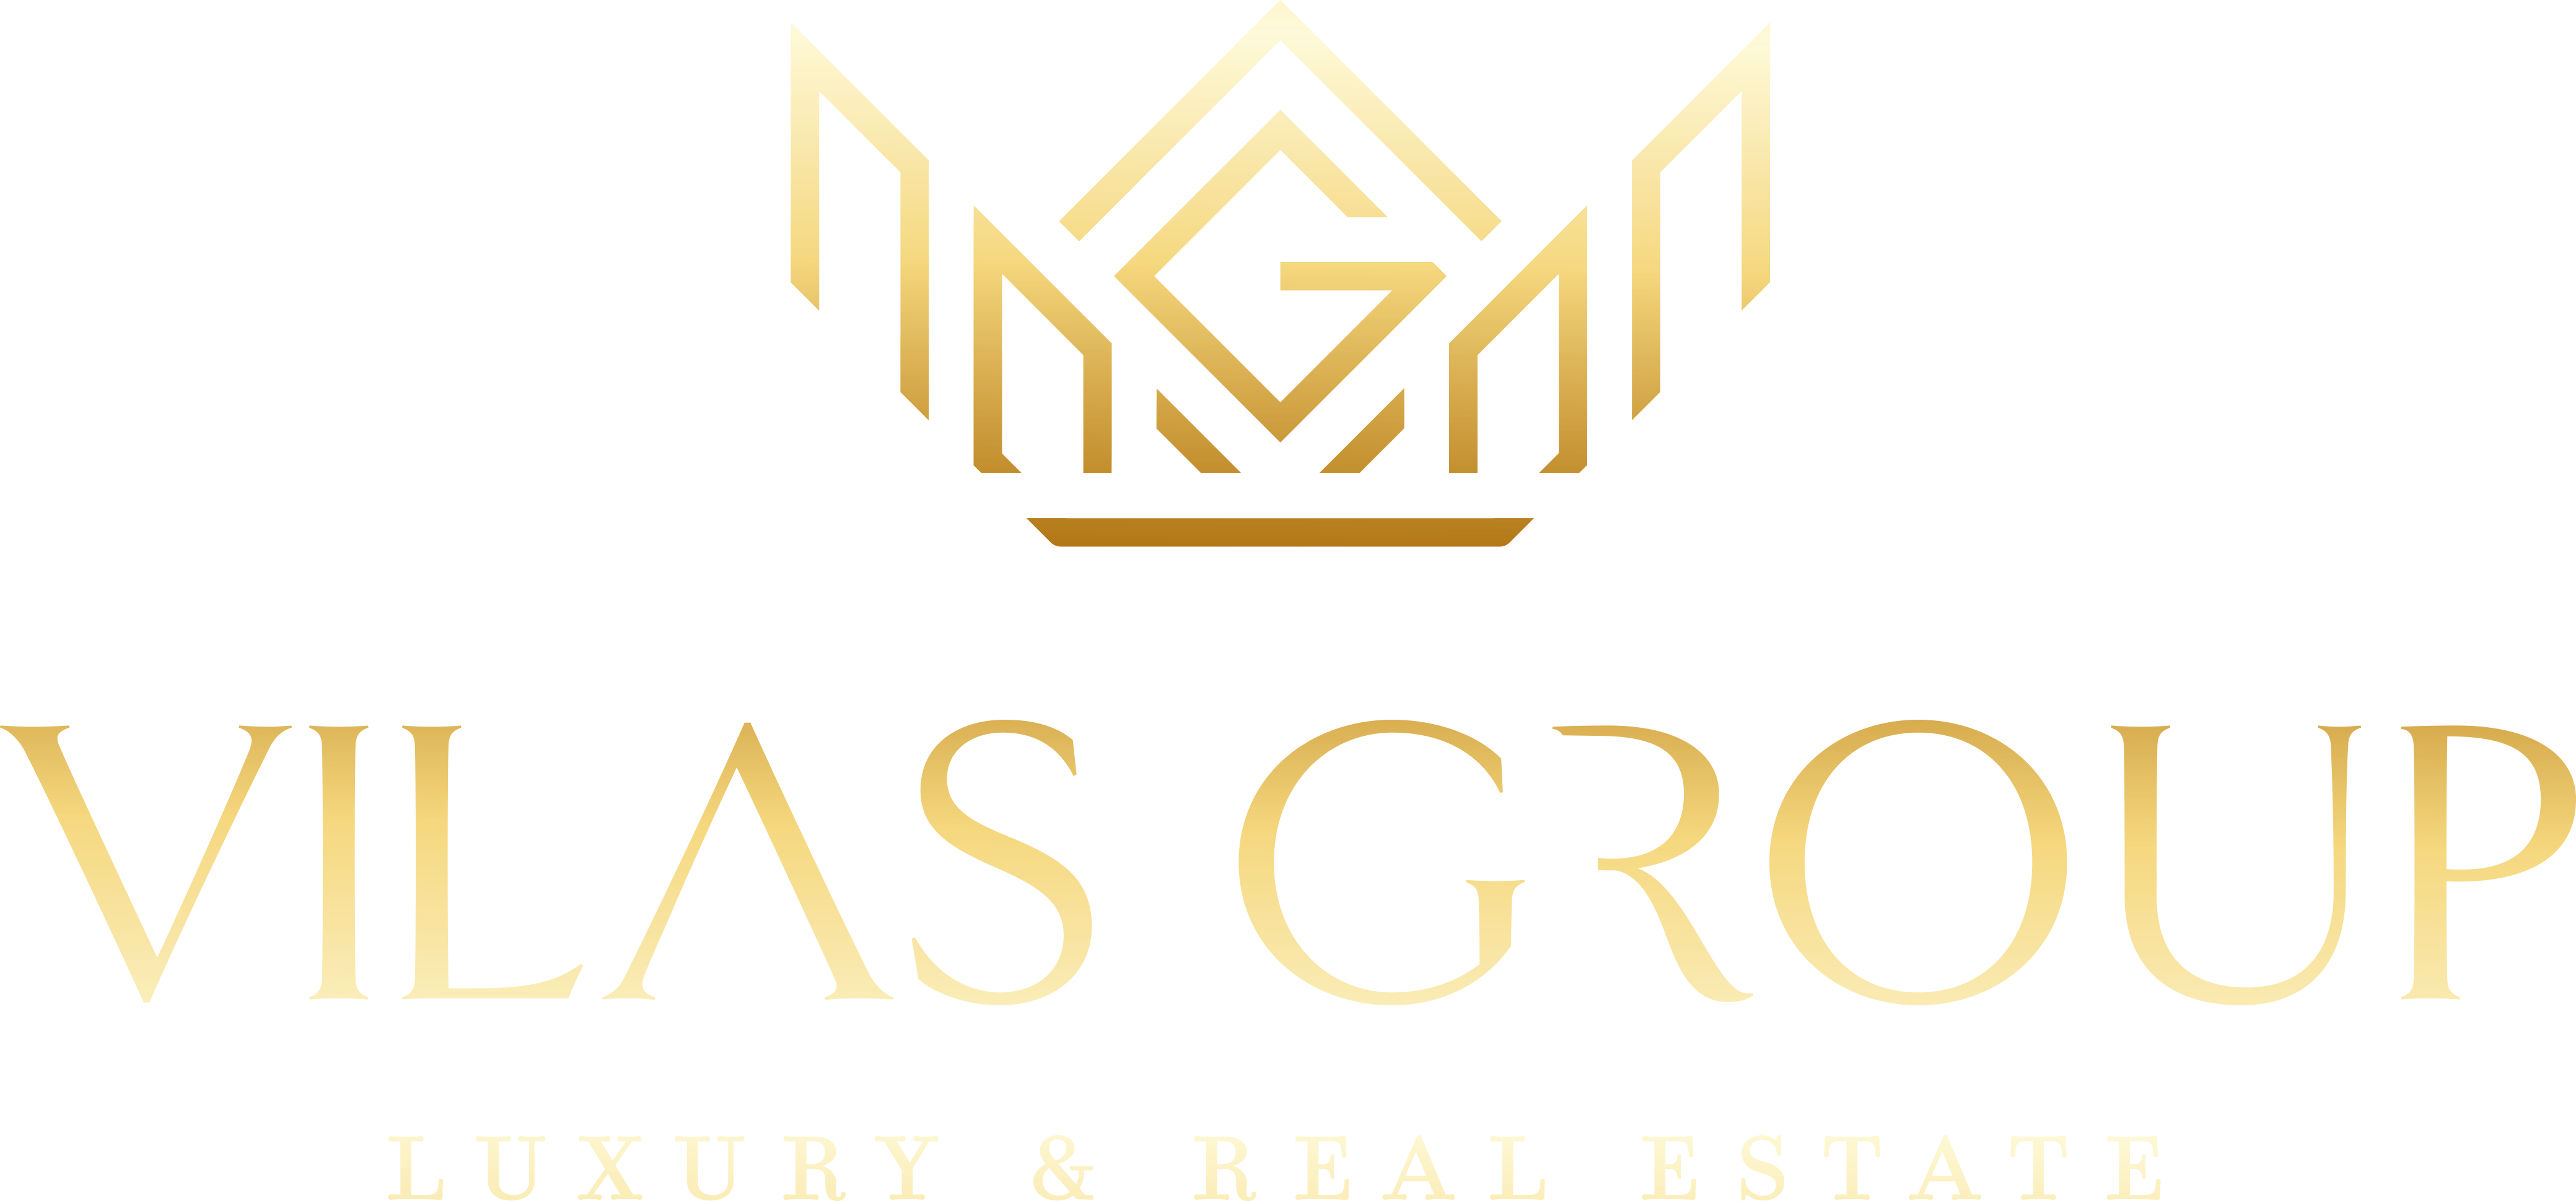 Logo - Vilas Group | Luxury & Real Estate